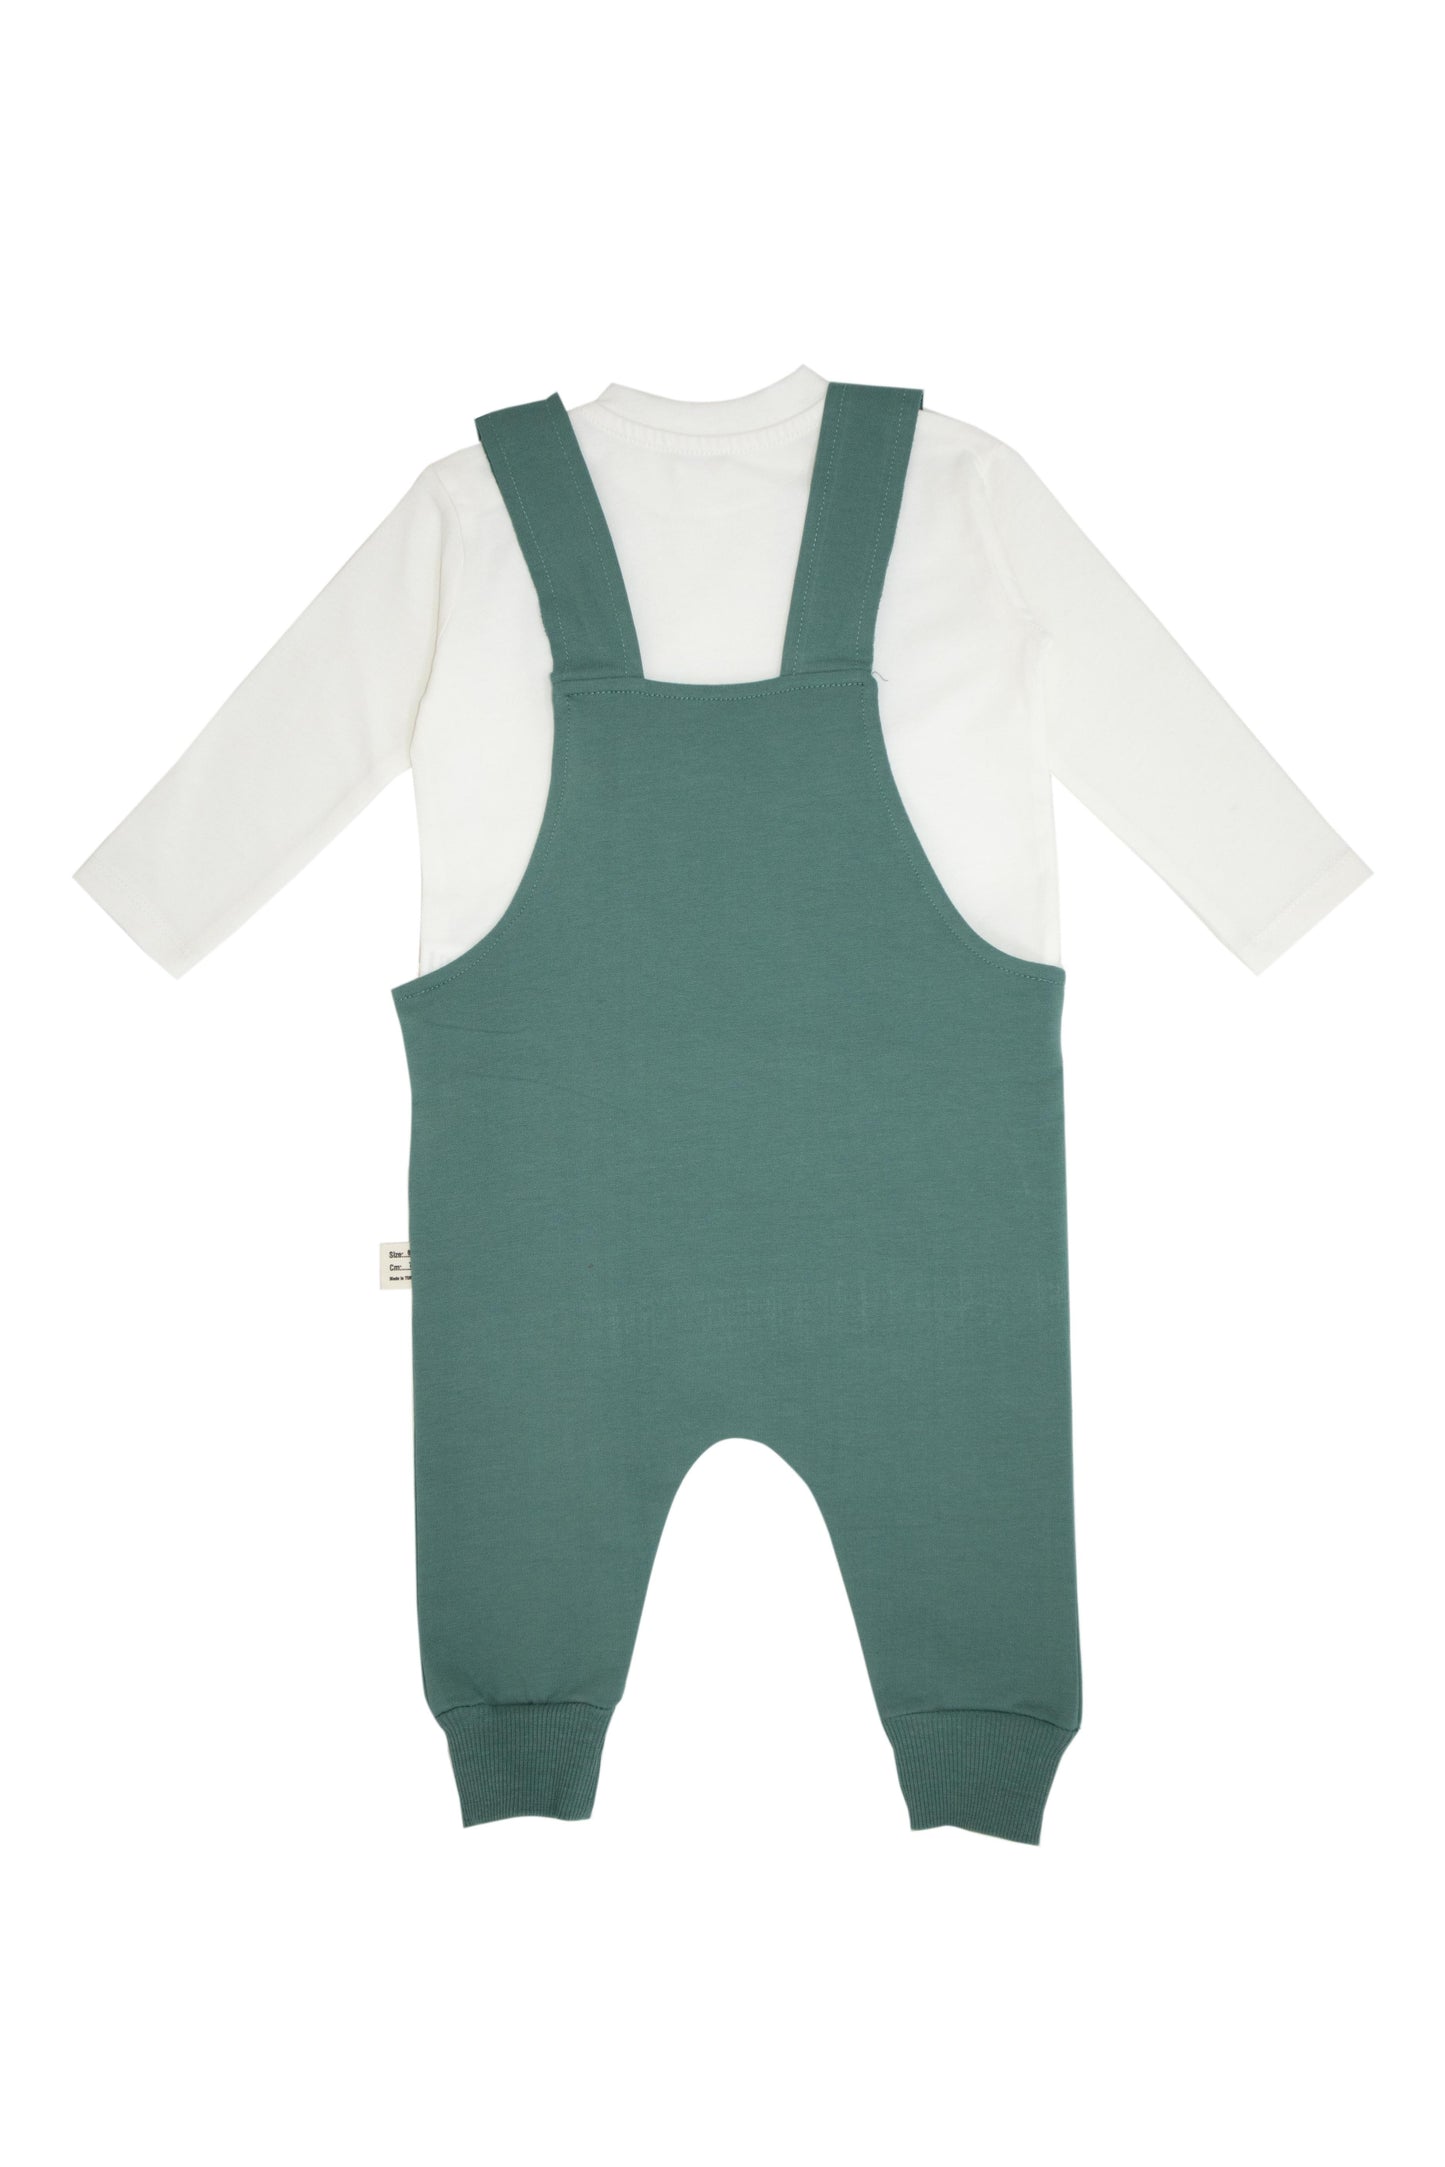 Baby Front Kangaroo Pocket Salopet-Badi Suit And Beret